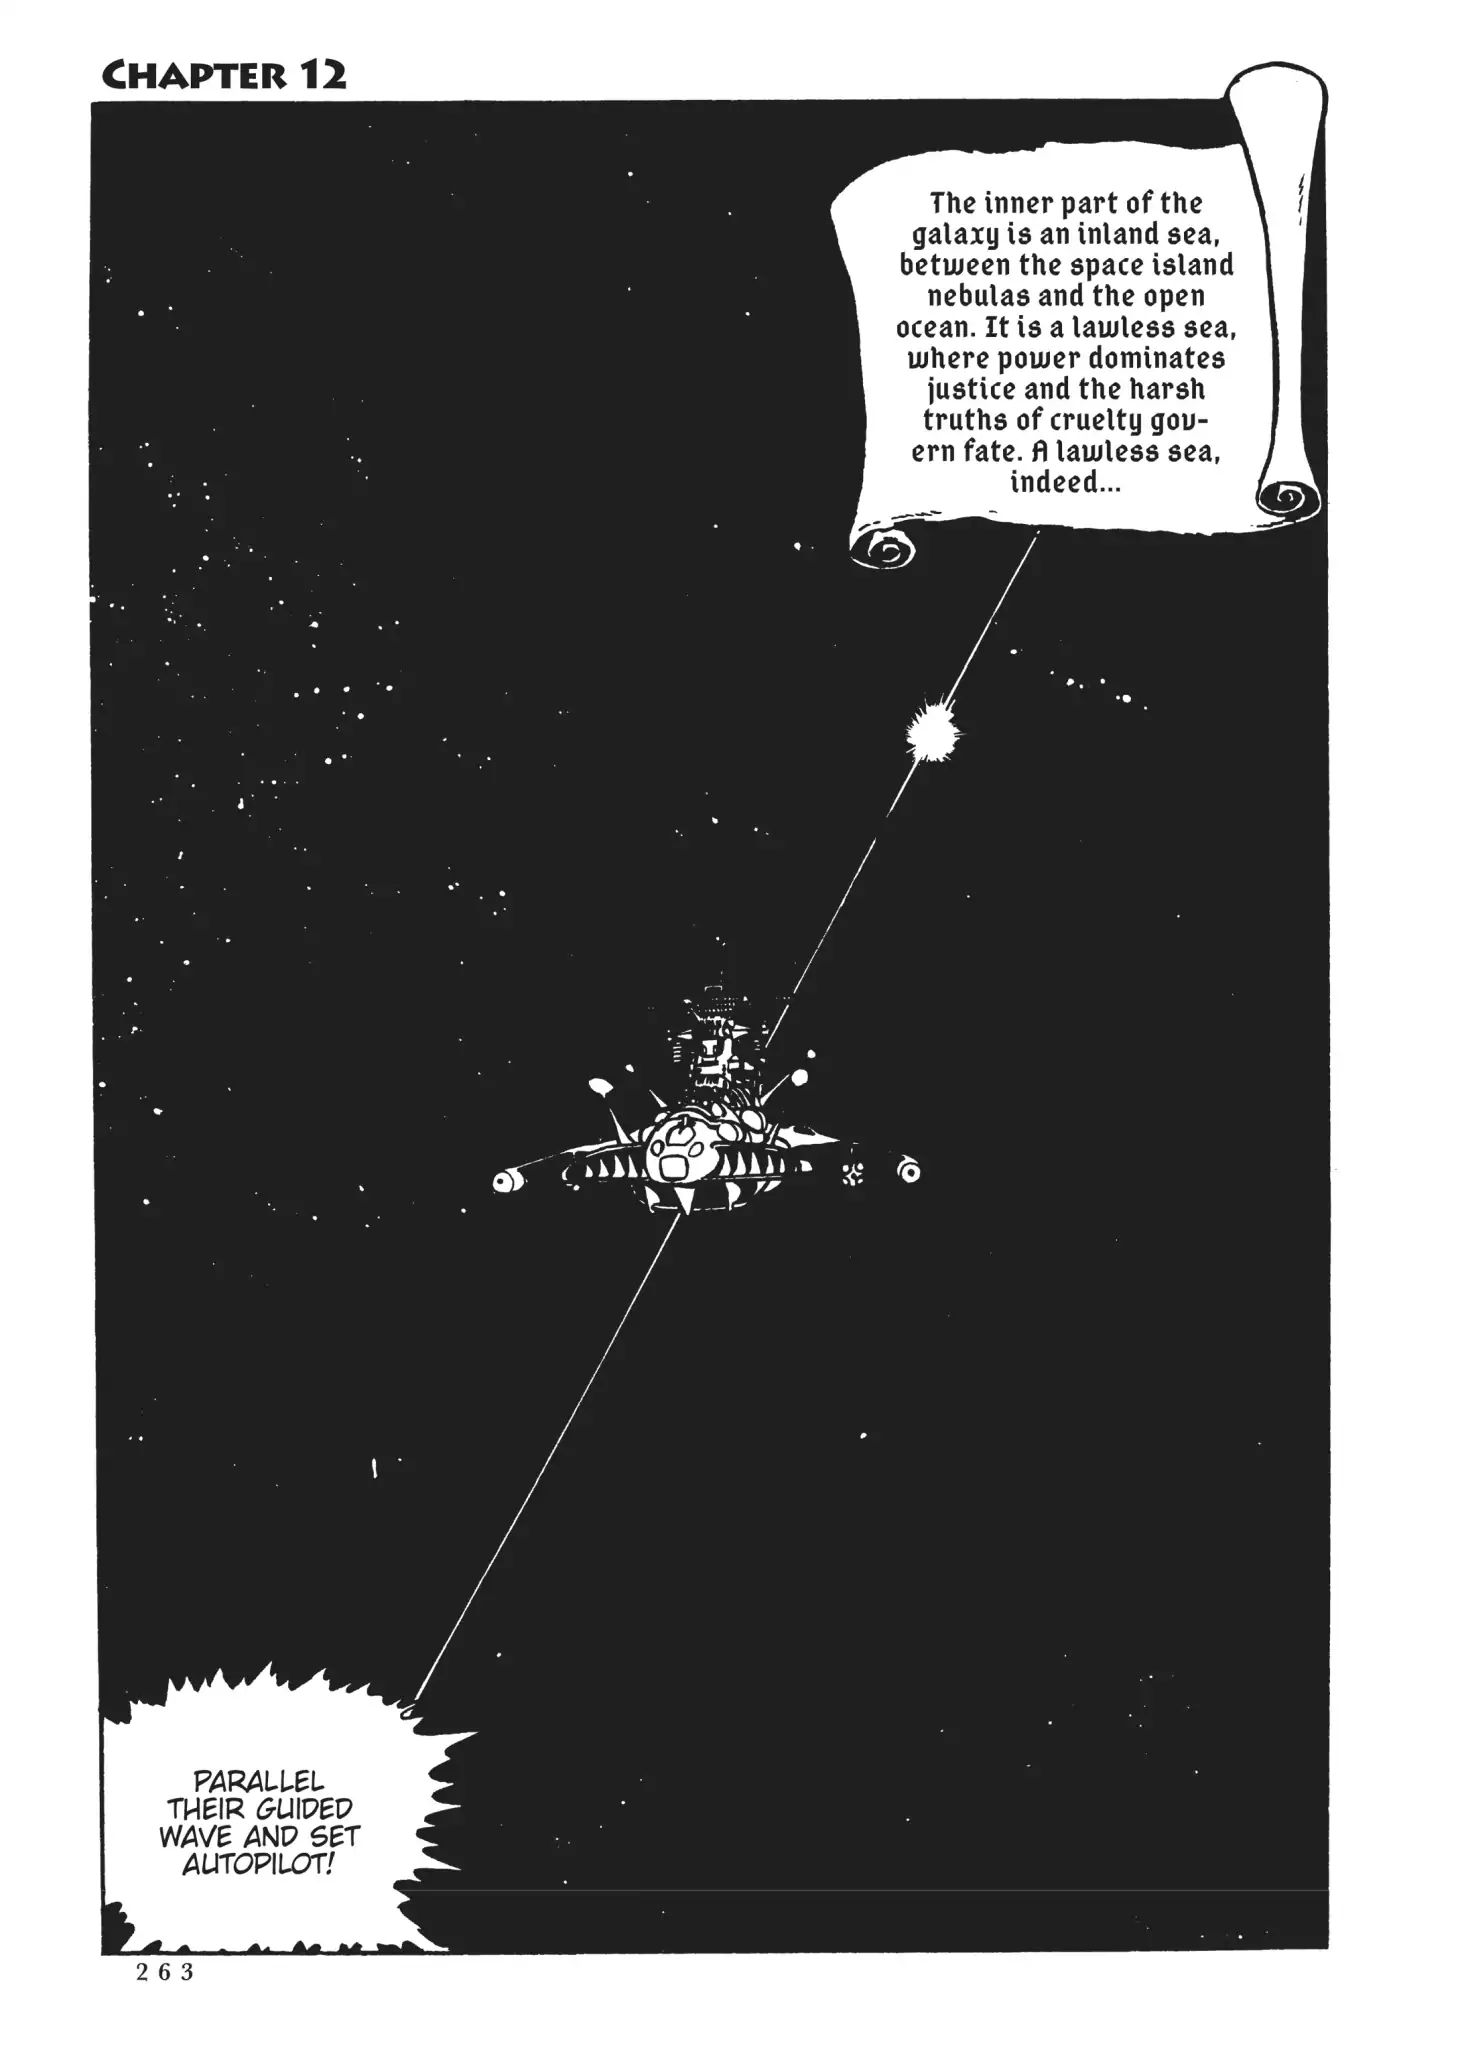 Uchuu Kaizoku Captain Harlock - Page 1